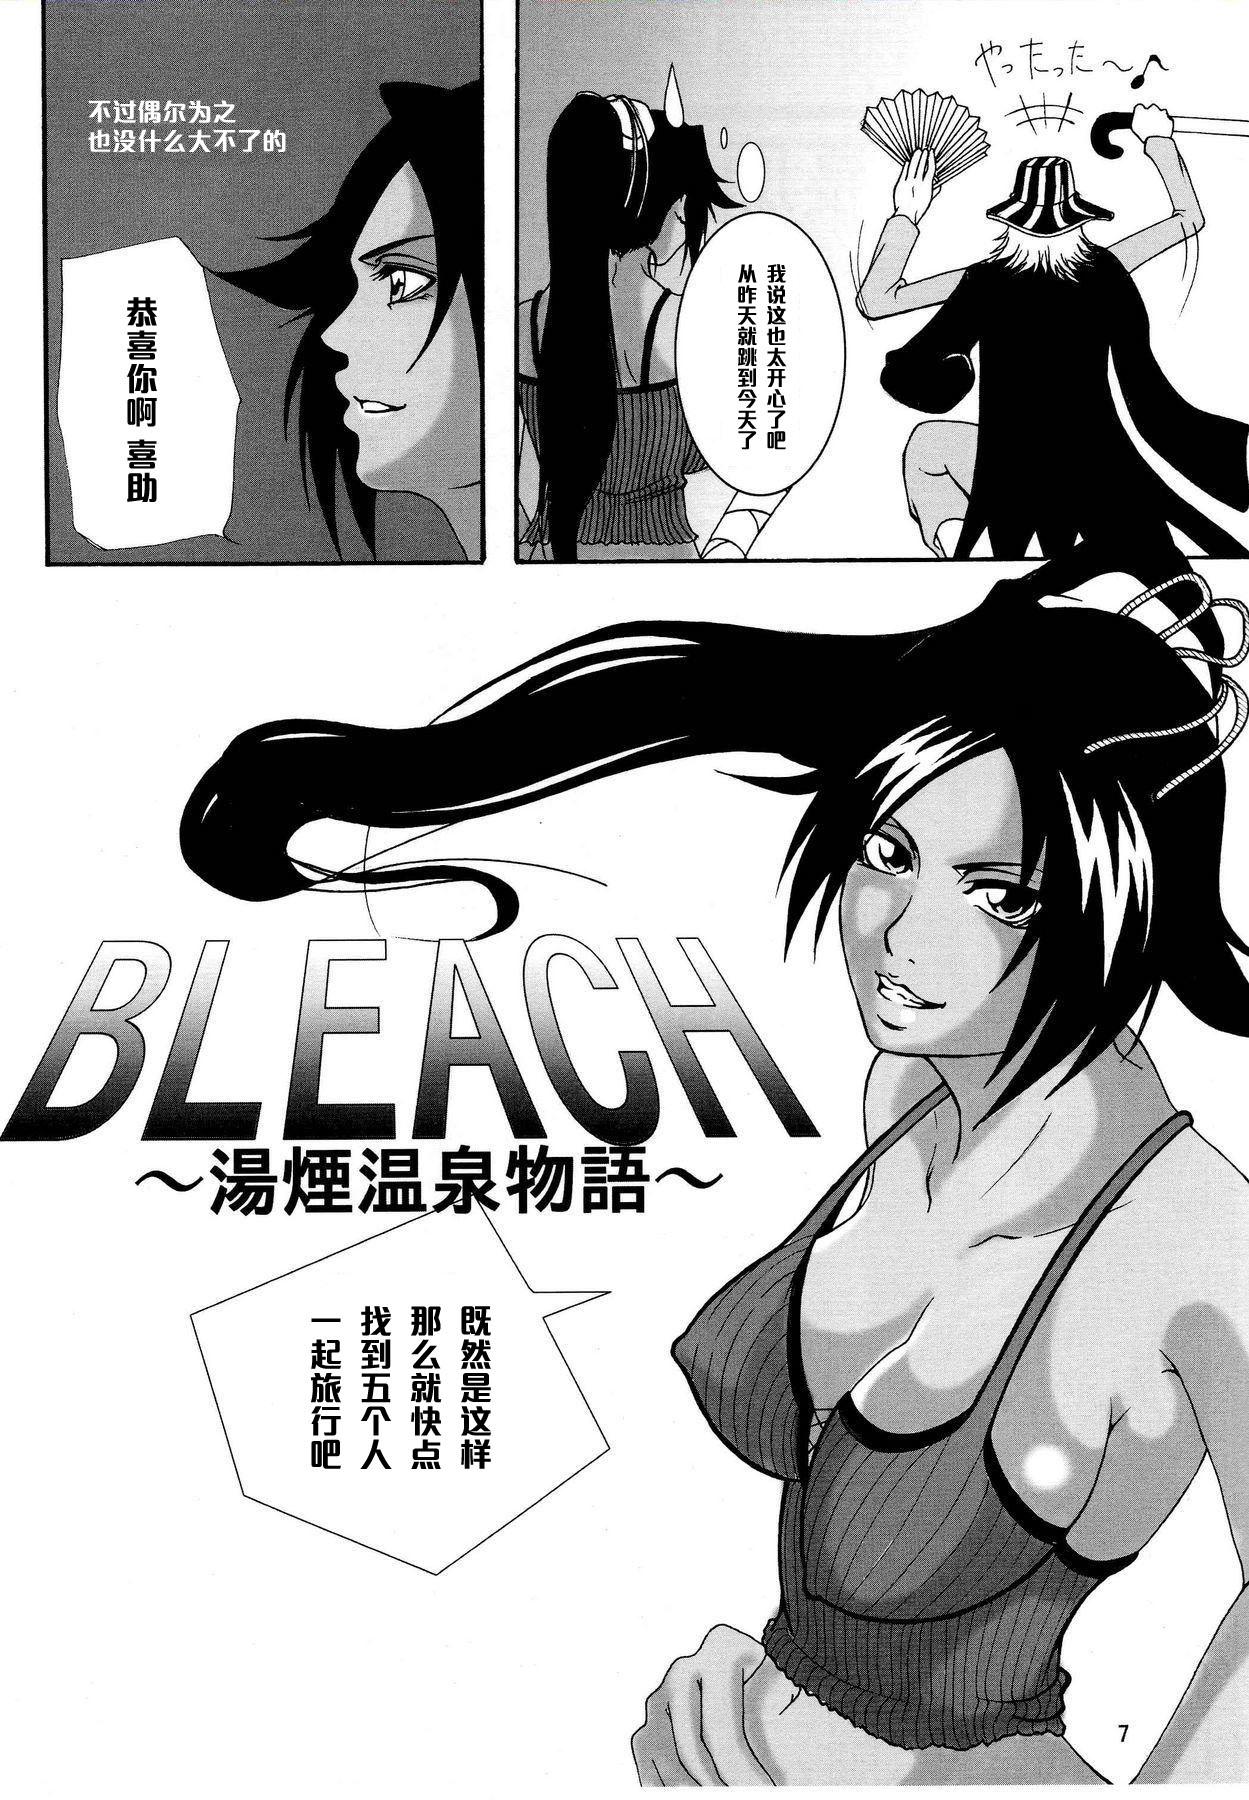 Sologirl Benten Kairaku 6 - Bleach Italian - Page 6